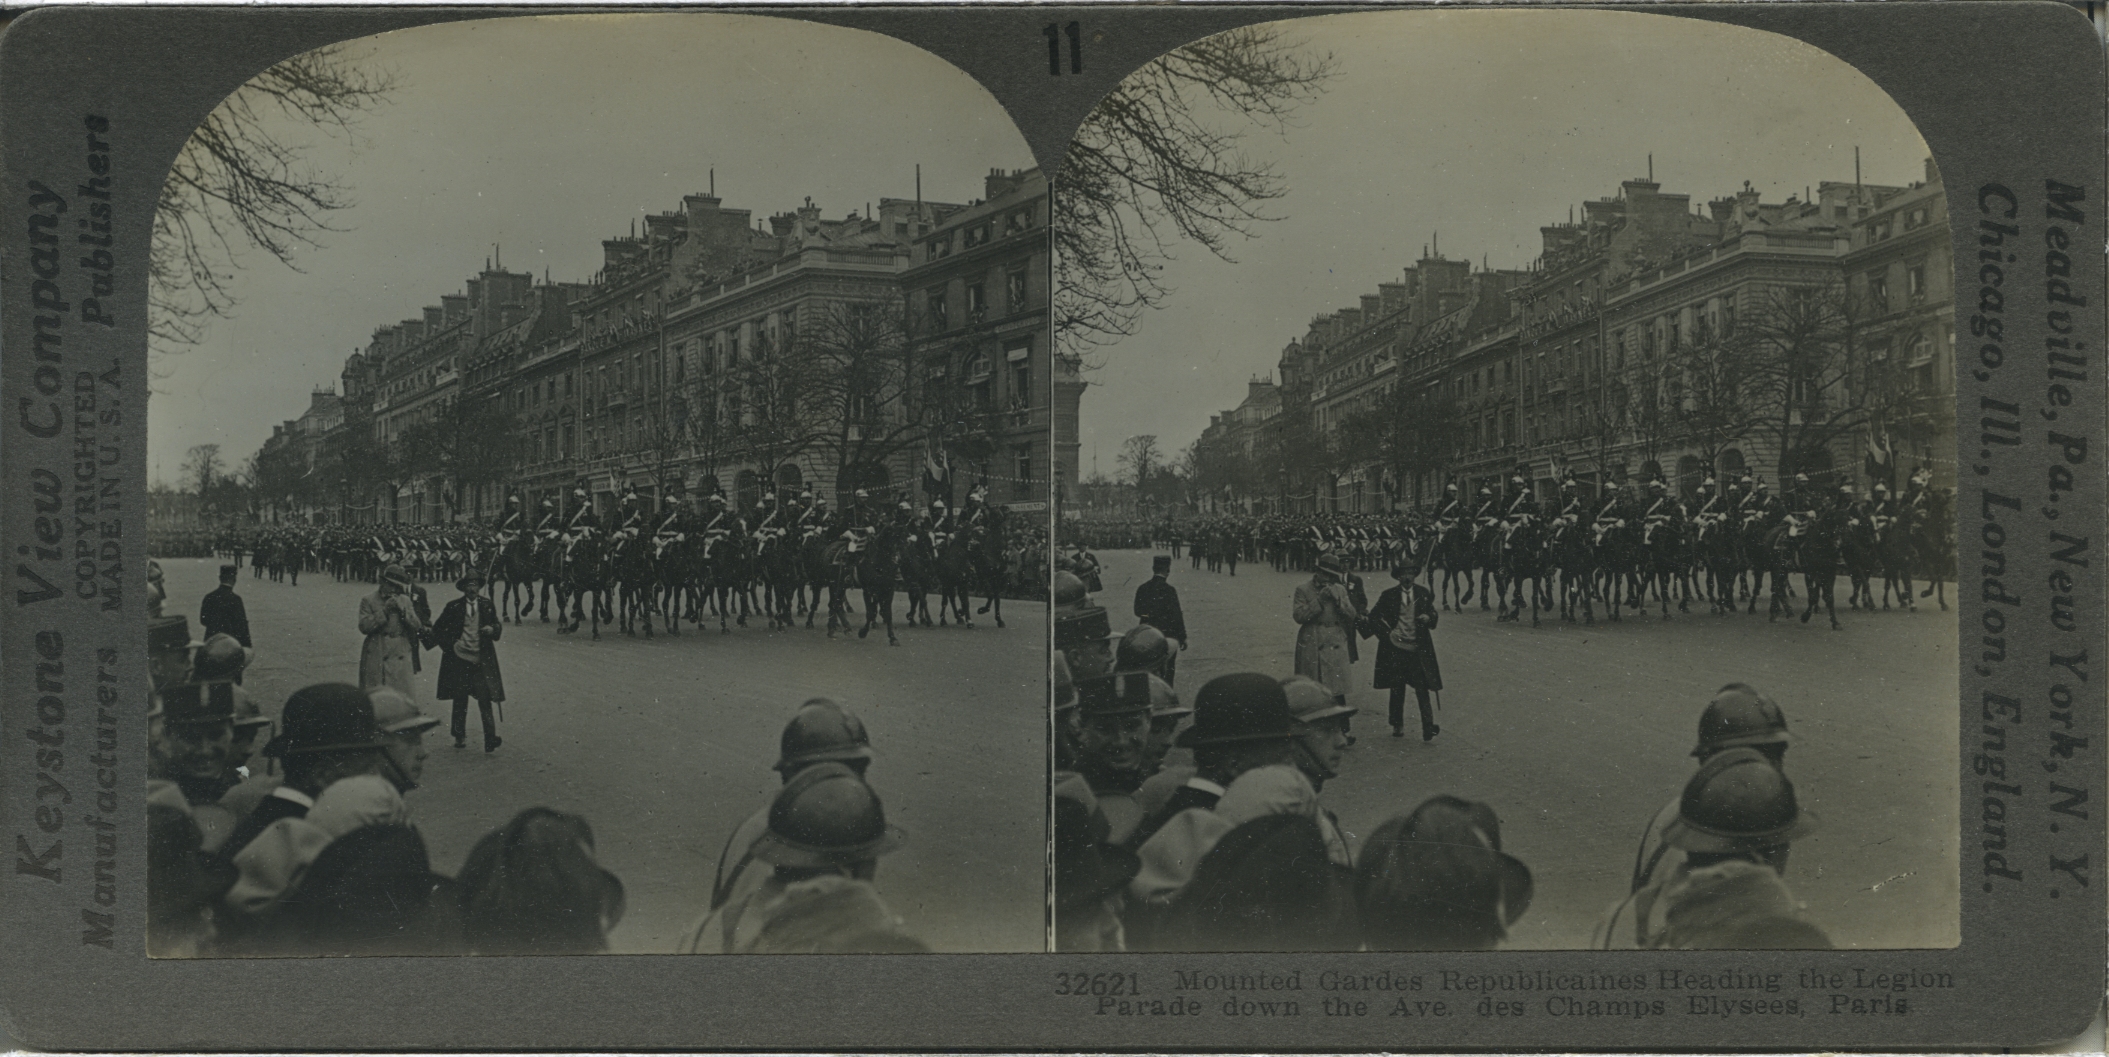 Mounted Gardes Republicaines Heading the Legion Parade down Ave. des Champs Elysees, Paris.